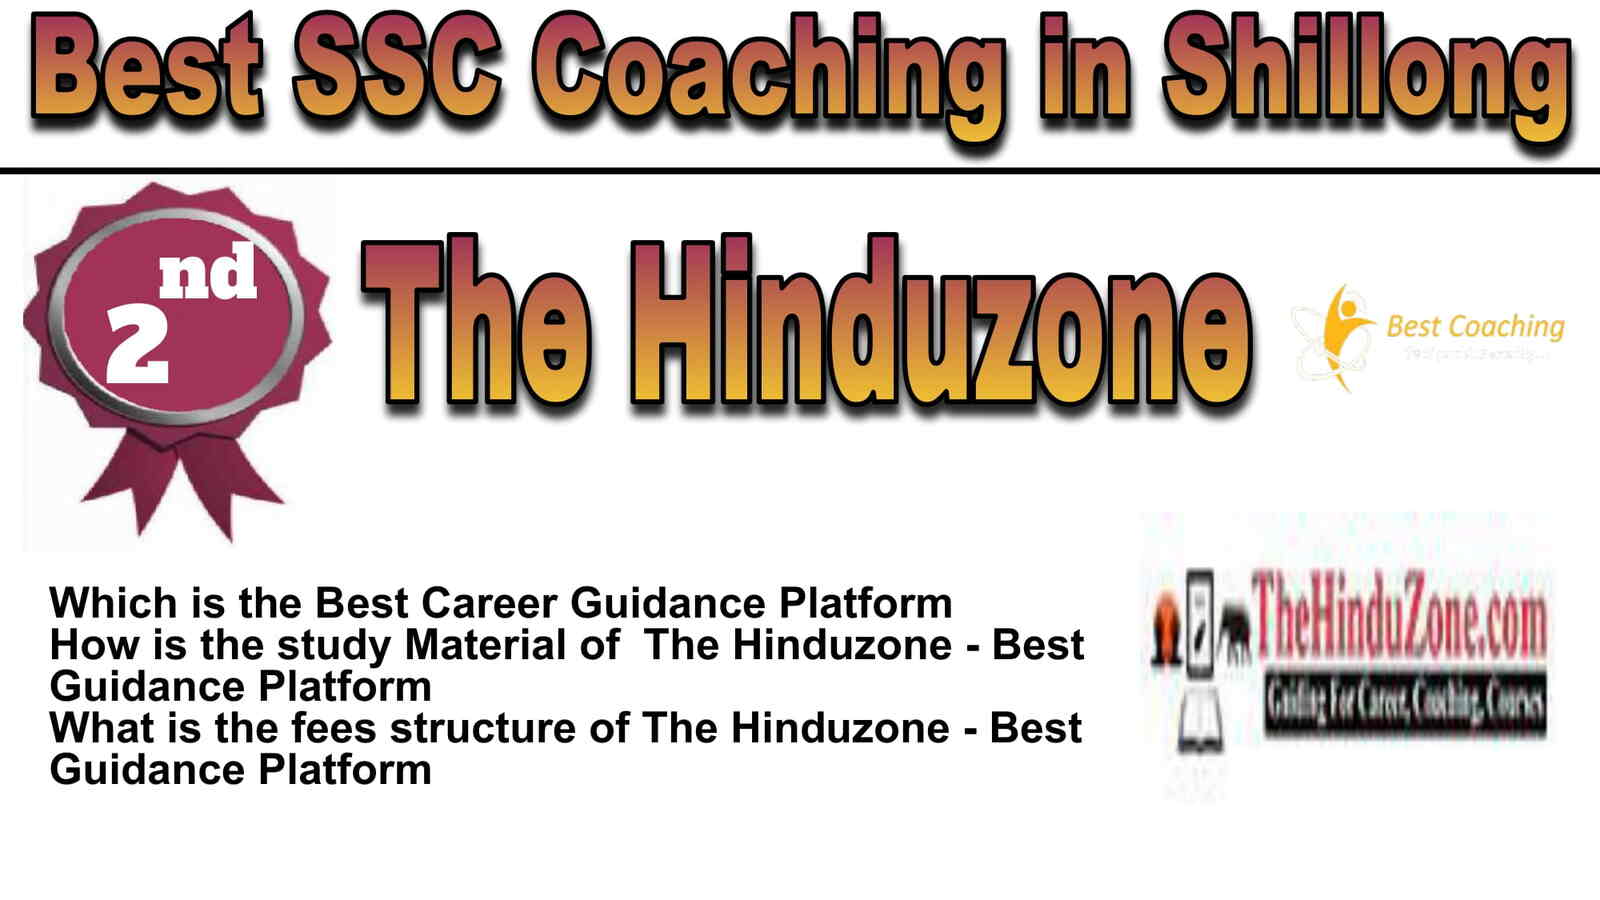 Rank 2 Best SSC Coaching in Shillong